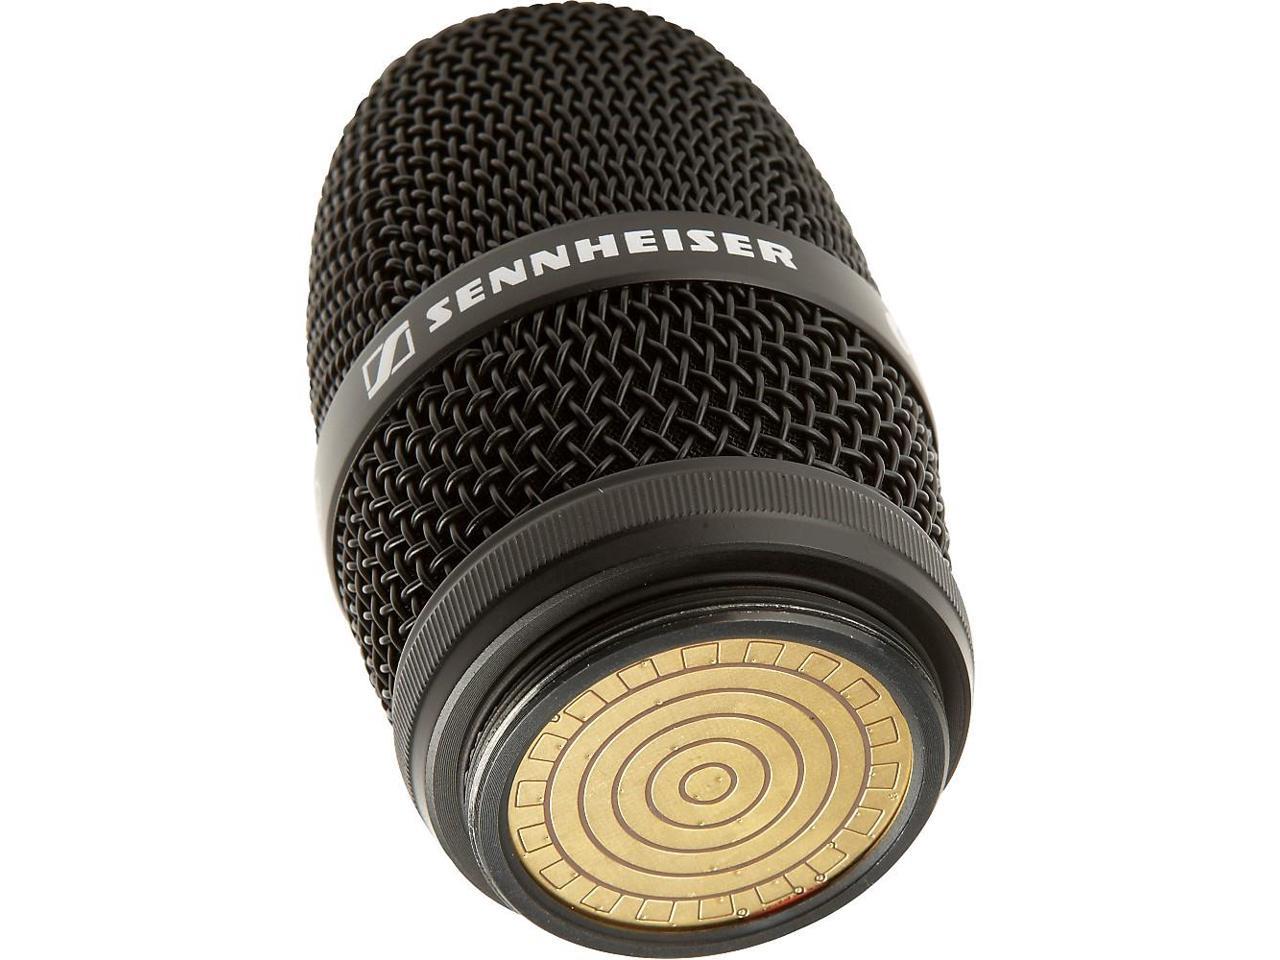 Sennheiser MMK 965-1 BK Condenser Microphone Module with Cardioid Super-Cardioid Patterns Dual-membrane for Handheld Transmitters